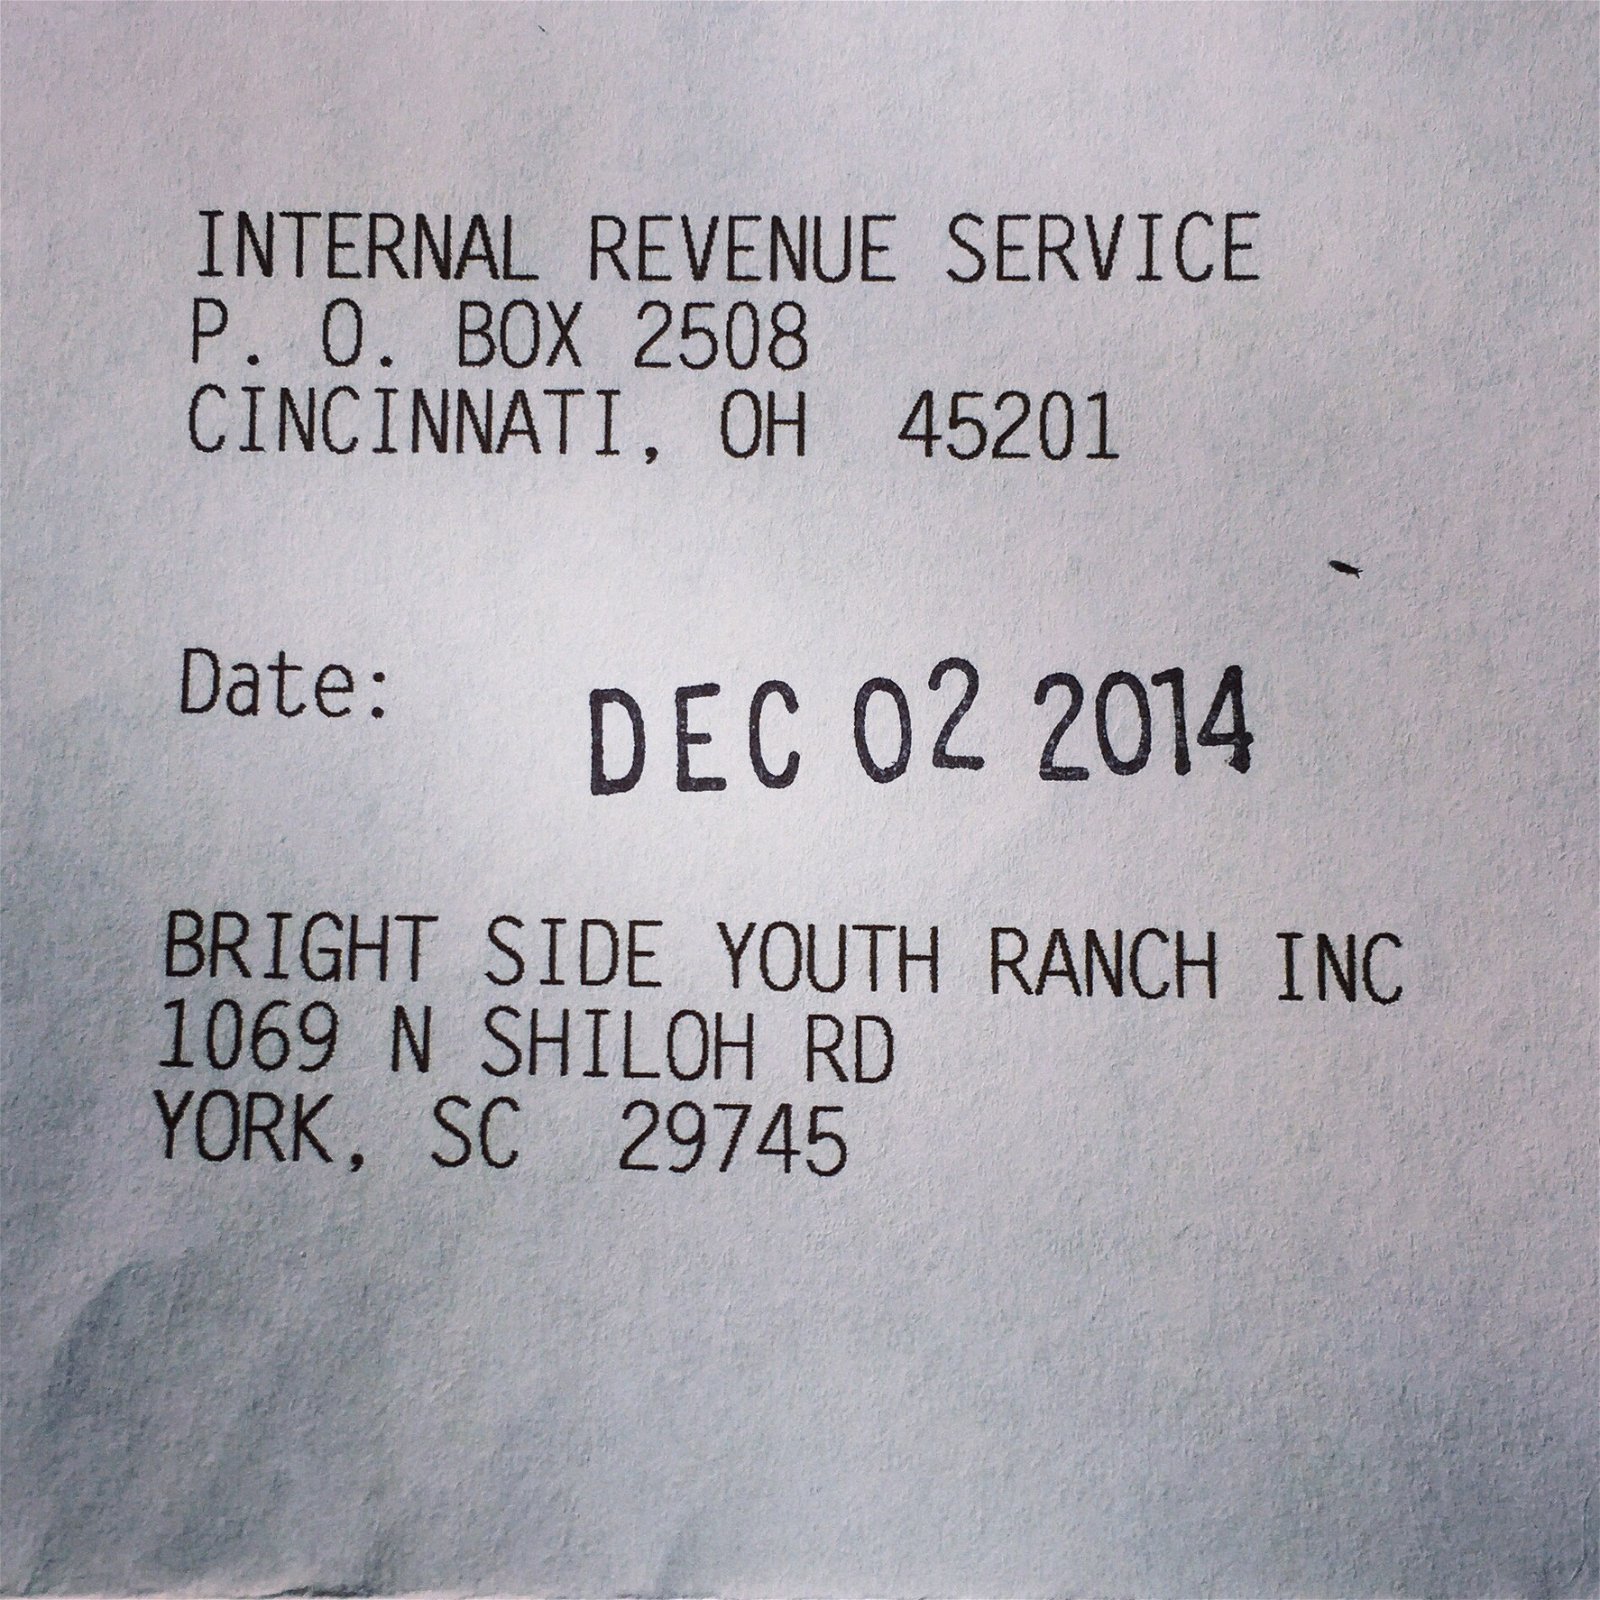 IRS receipt from Dec. 2, 2014